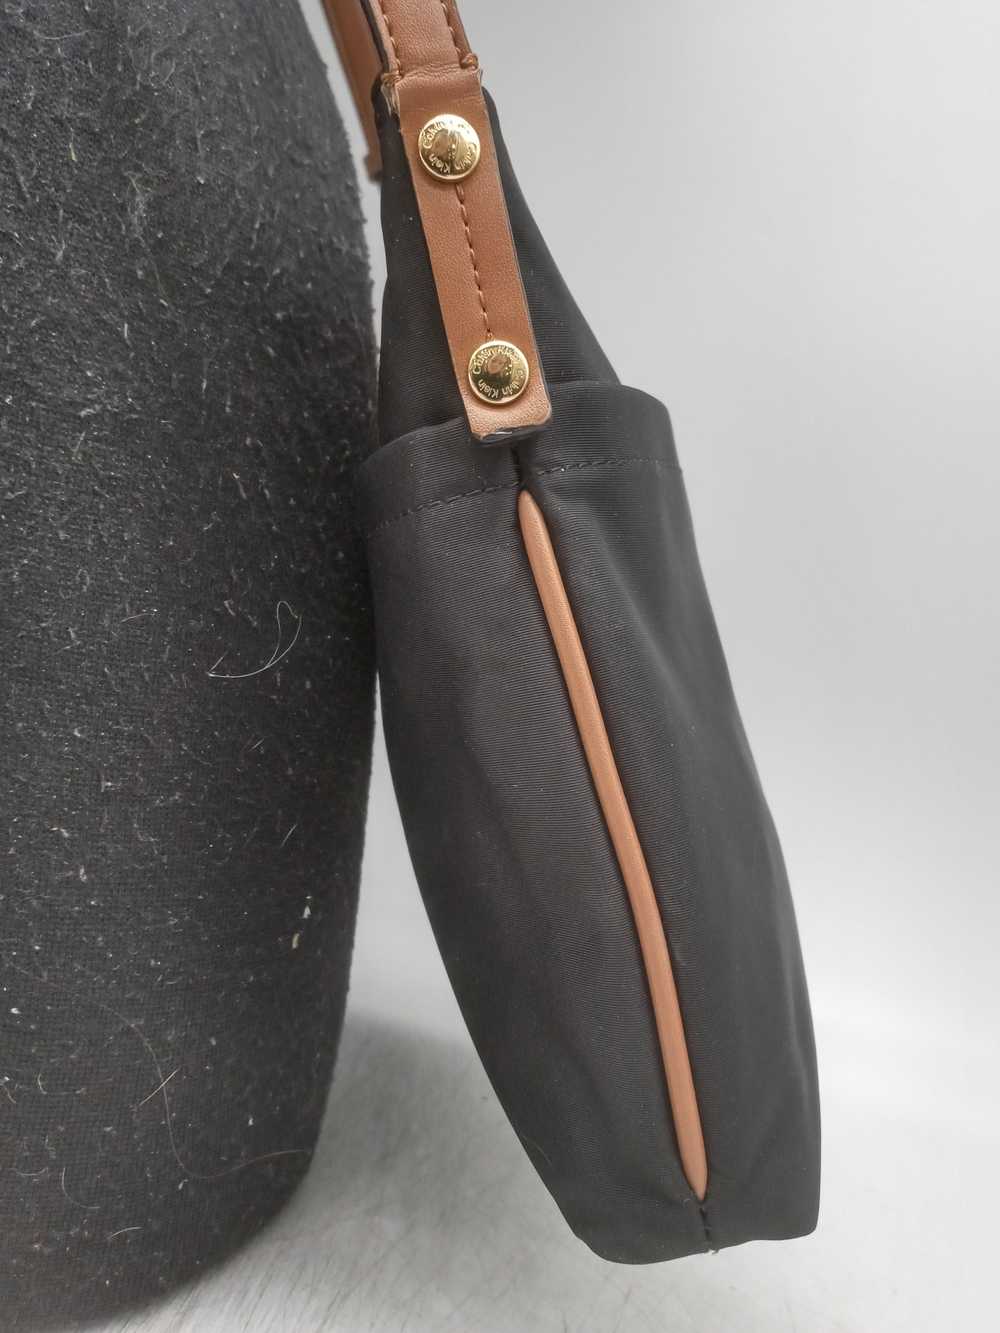 Calvin Klein Black Nylon Crossbody Handbag Purse - image 6